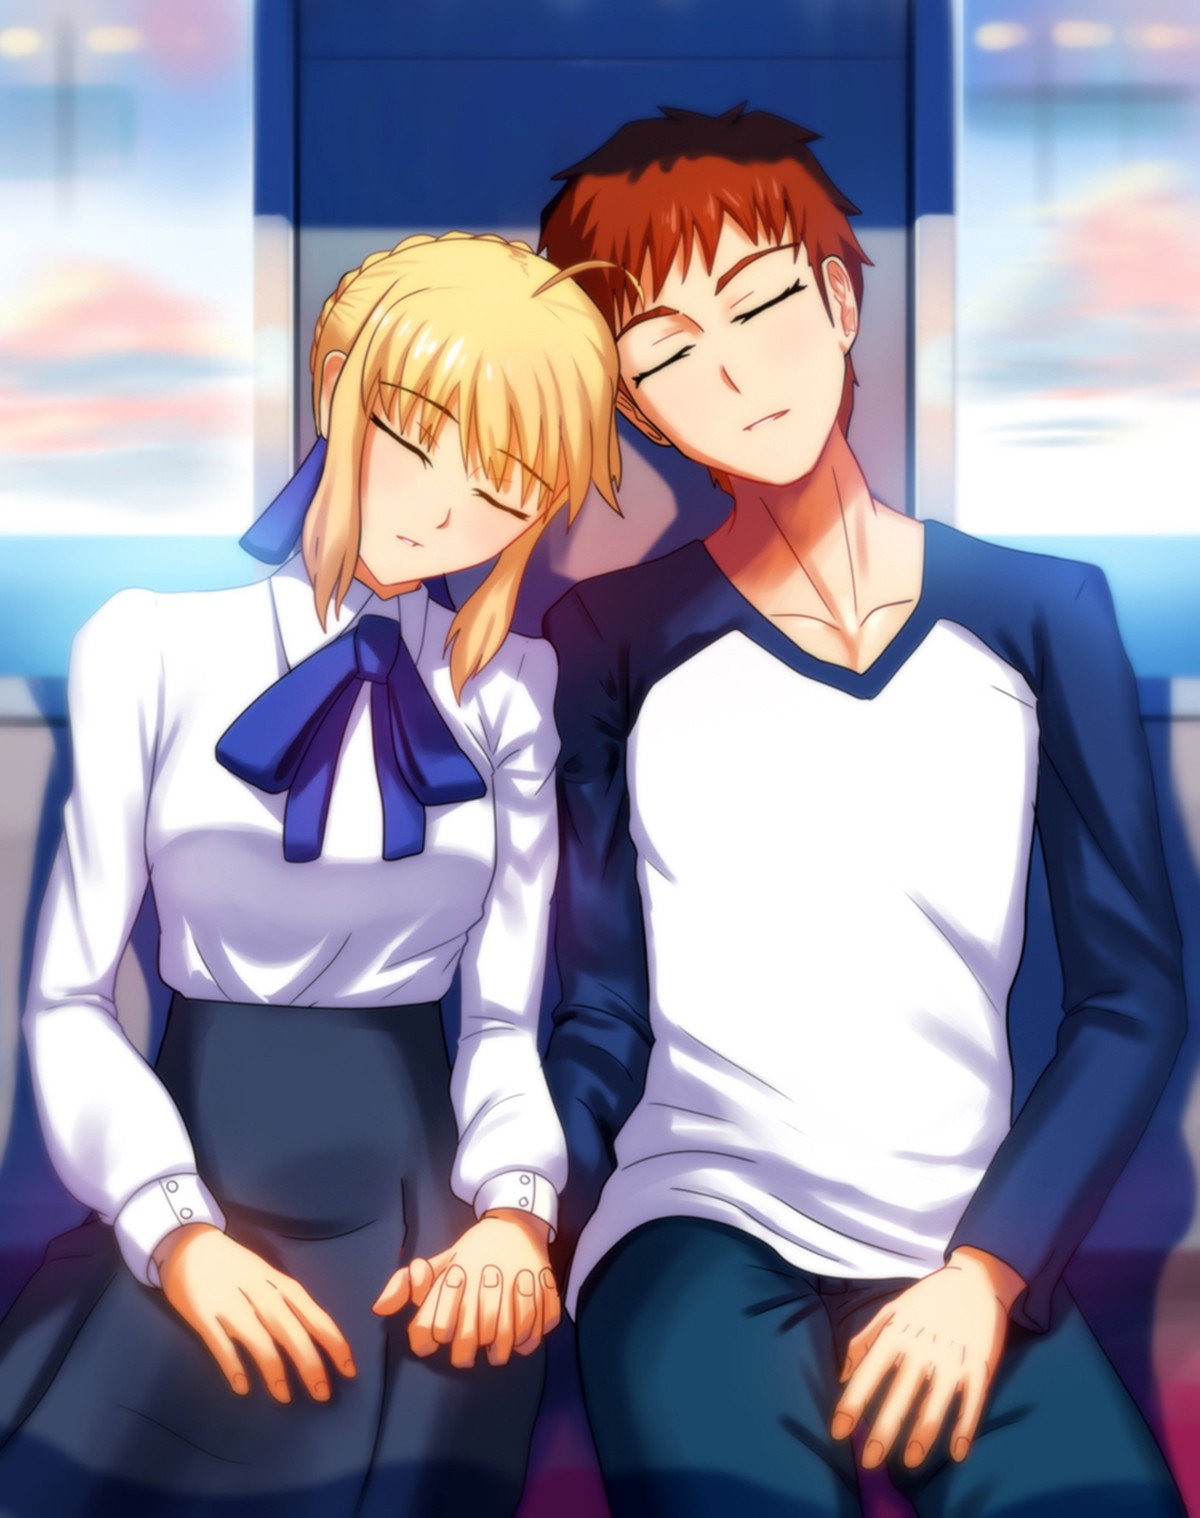 Anime 1200x1518 Fate series Saber sleeping anime girls anime boys holding hands couple blonde redhead women men anime sitting closed eyes